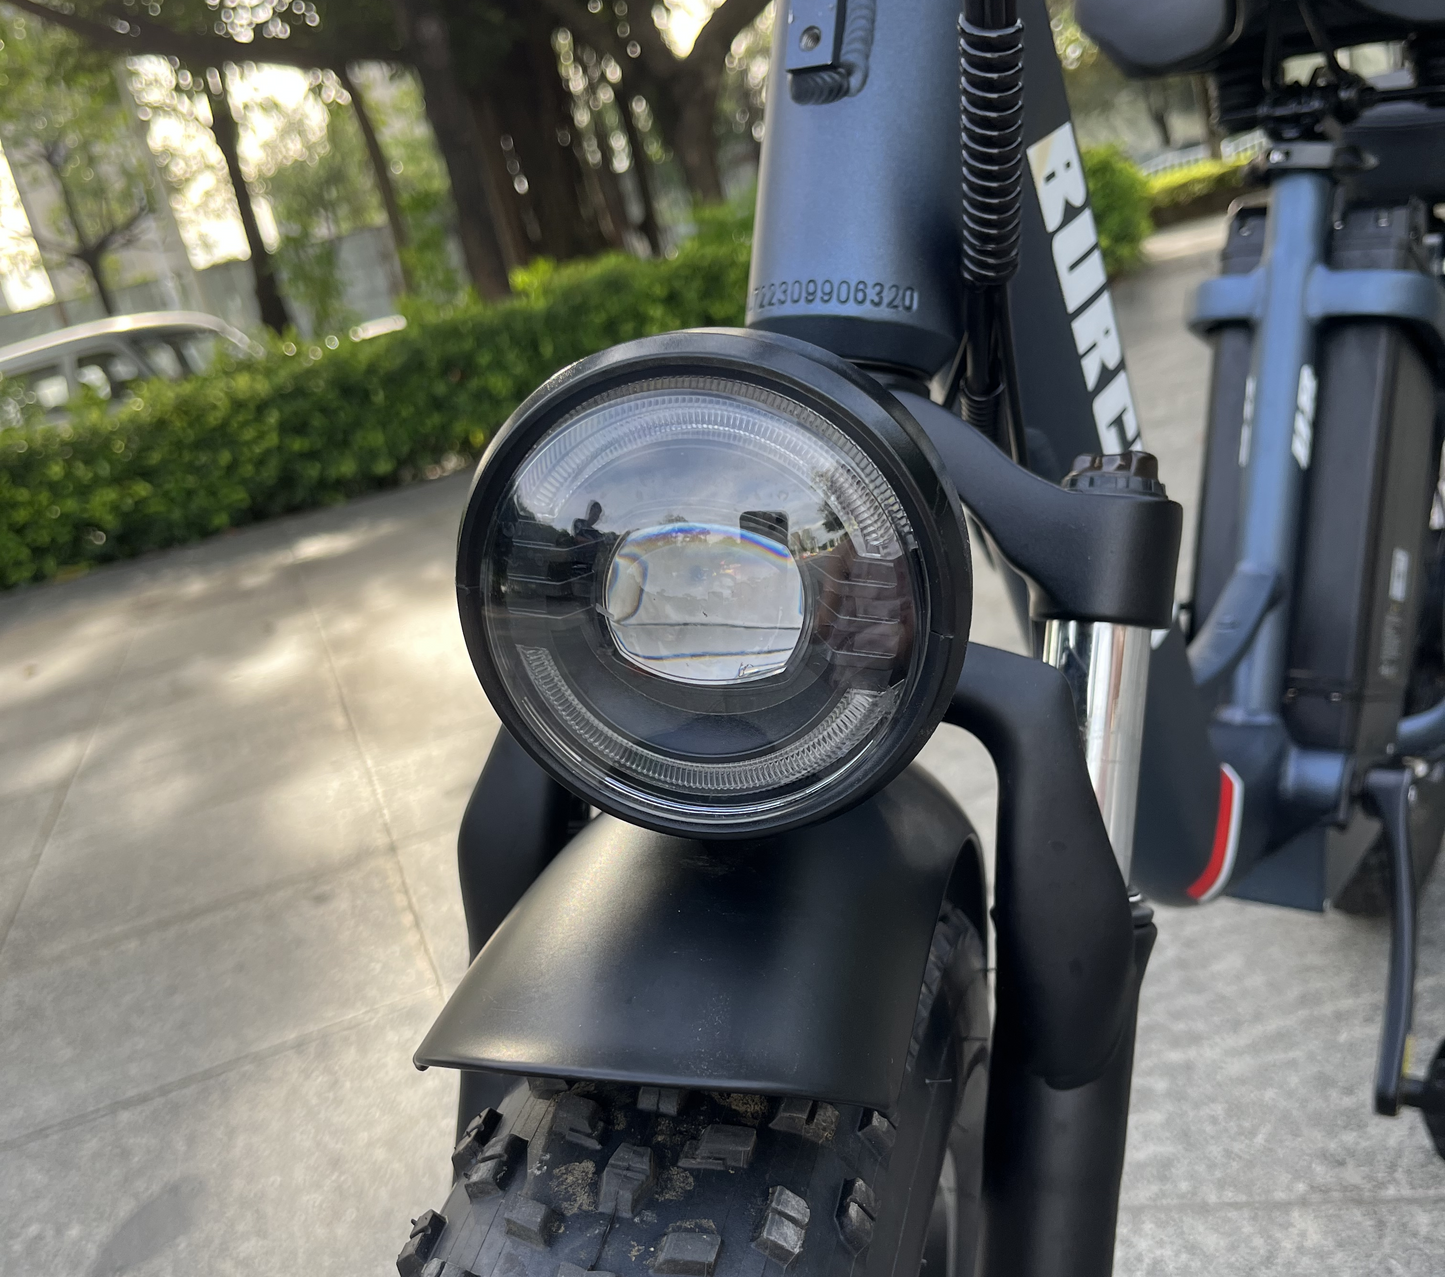 Originele koplamp voor BURCHDA E-bikes